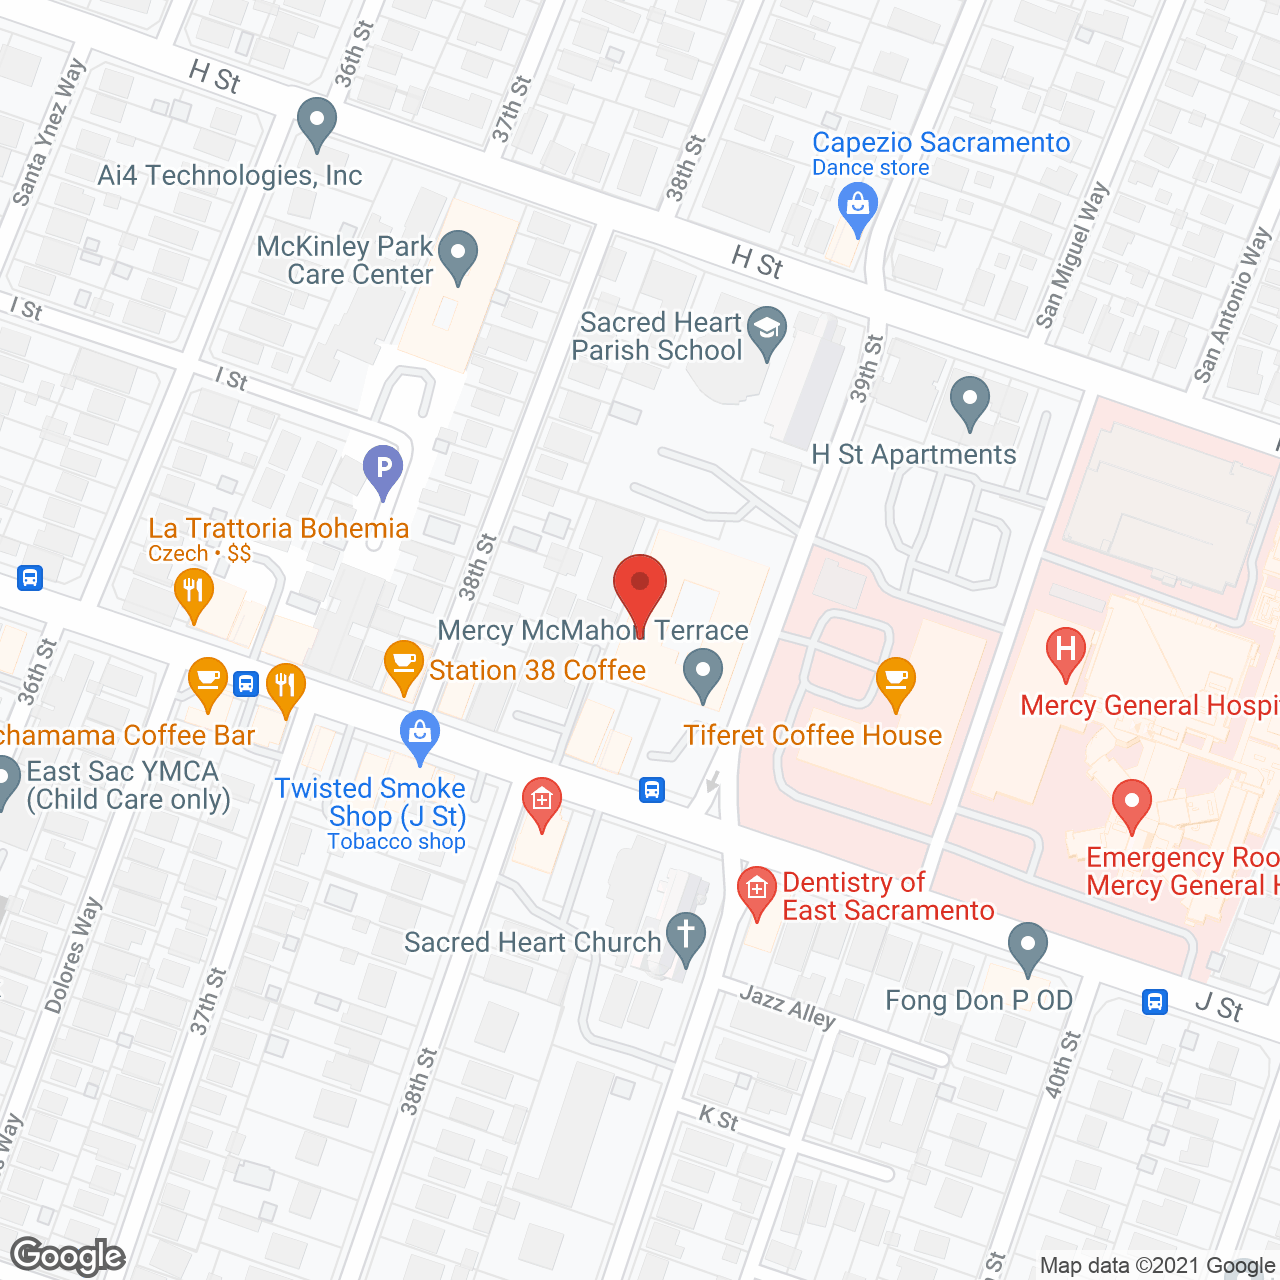 Mercy McMahon Terrace in google map